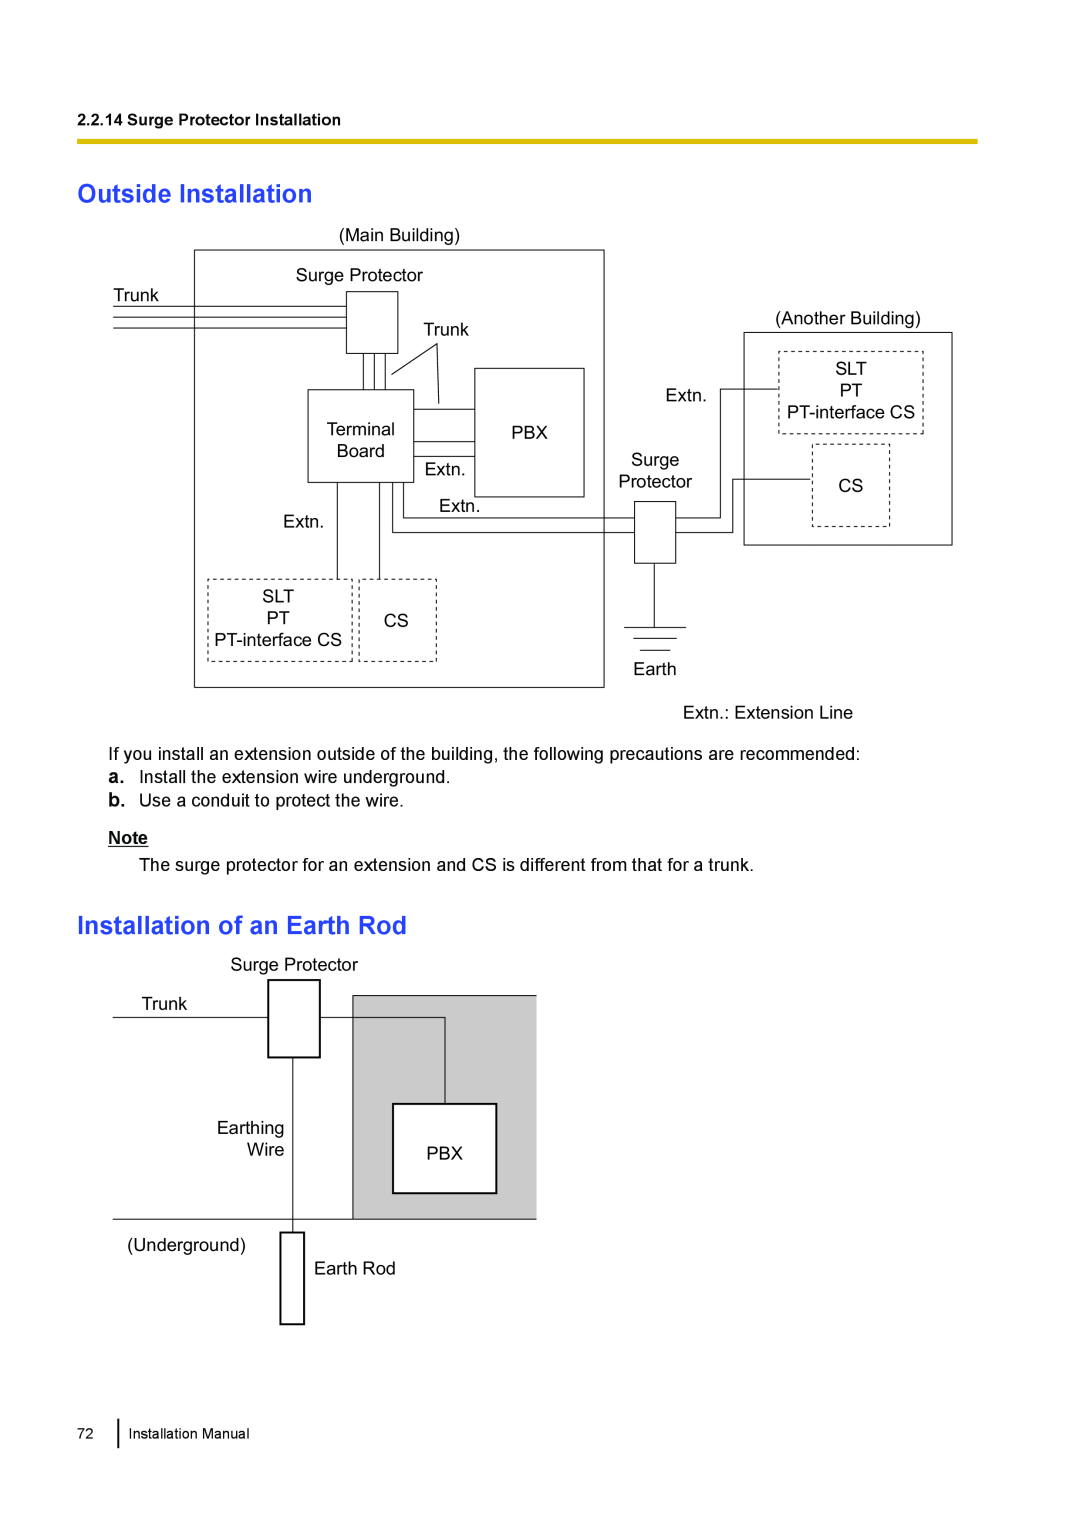 Panasonic KX-TDA100 installation manual Outside Installation, Installation of an Earth Rod 